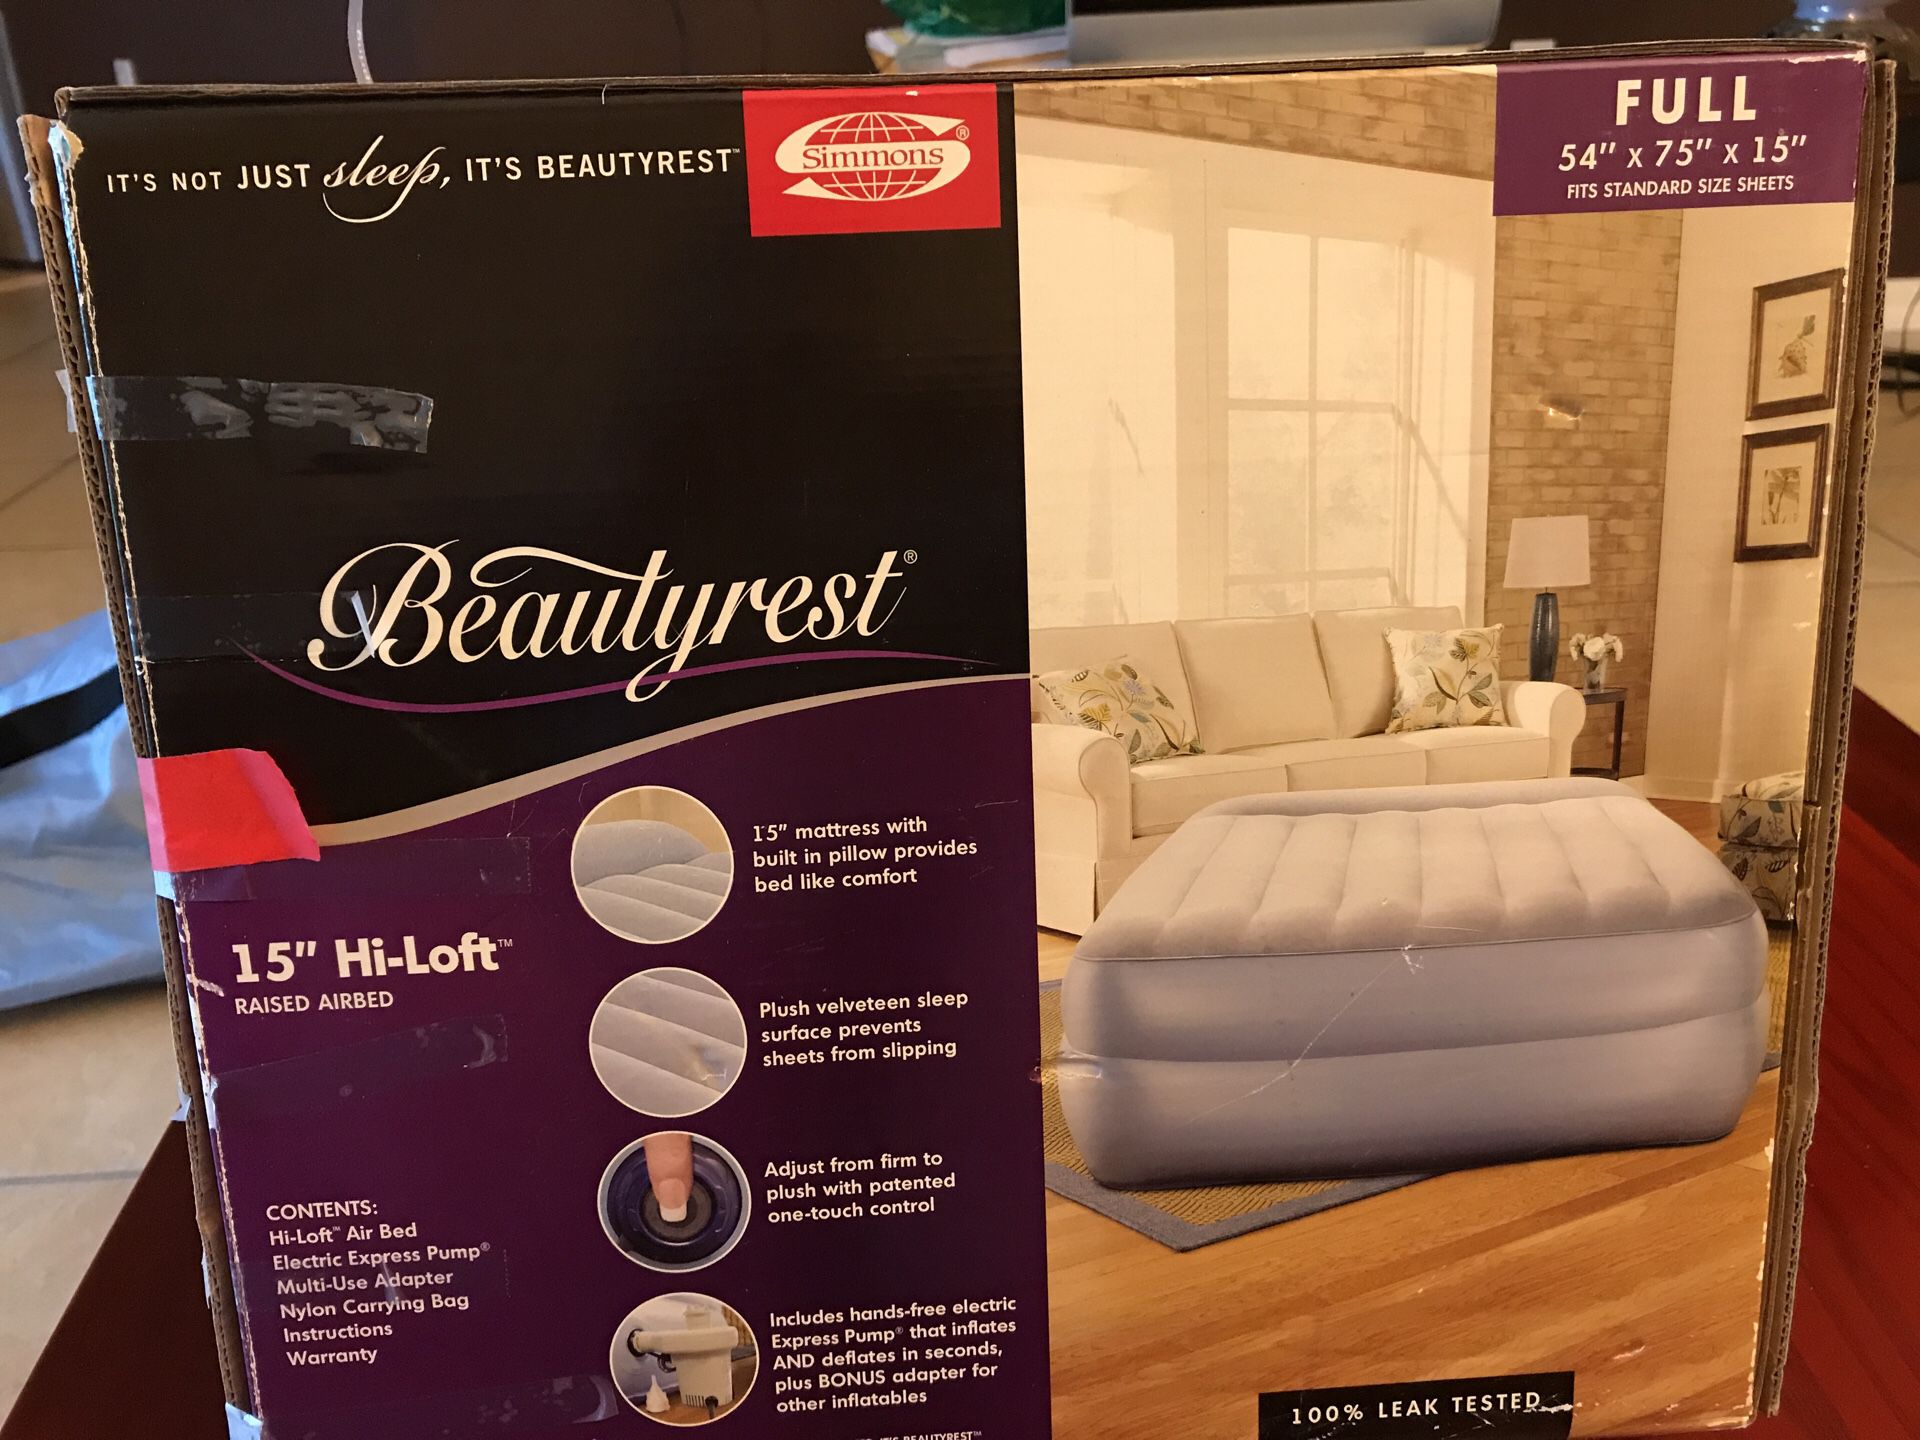 15” Hi-Loft raised Full size air mattress